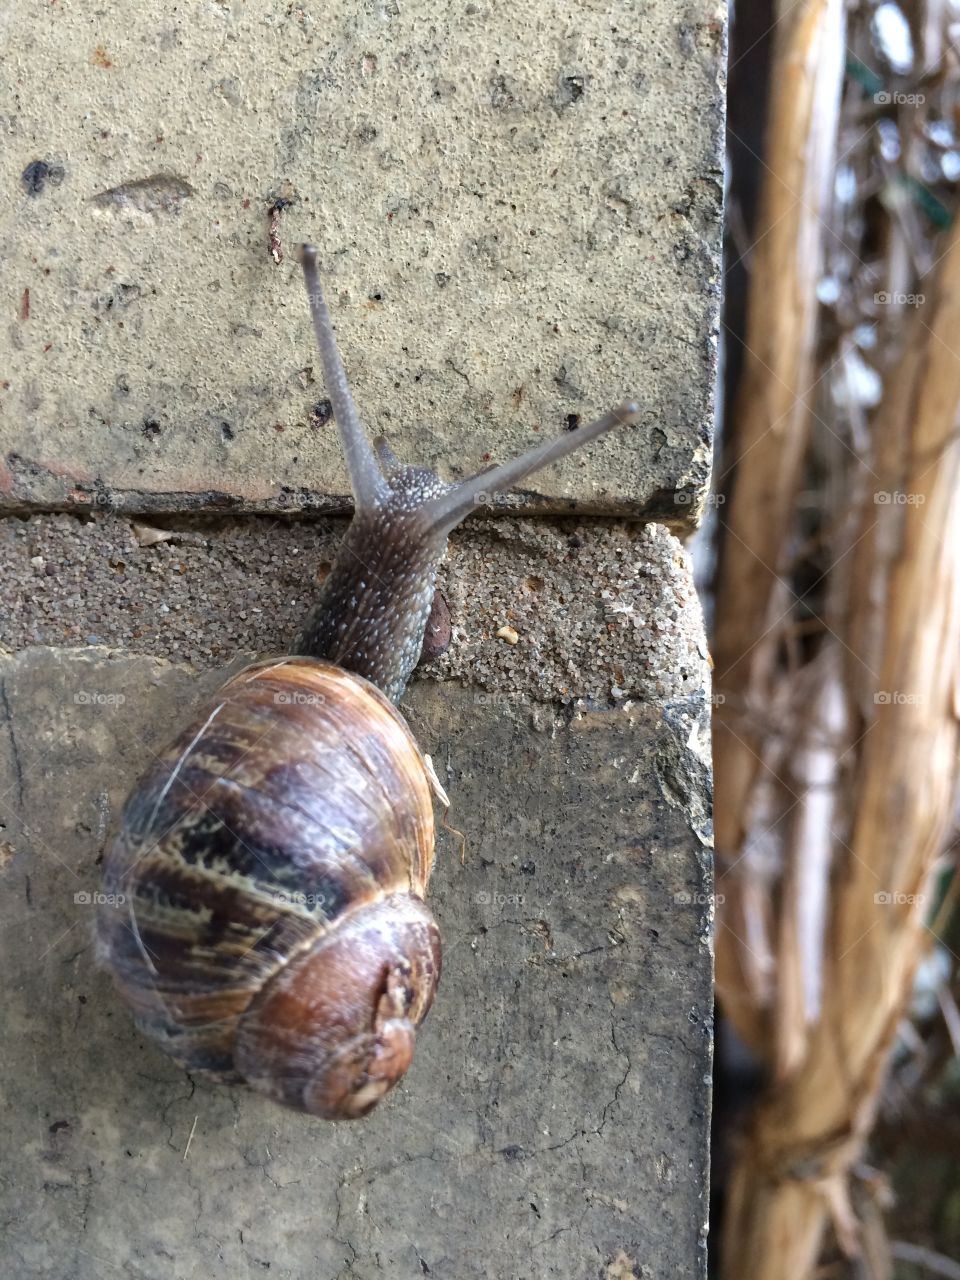 Snail climbing up the wall